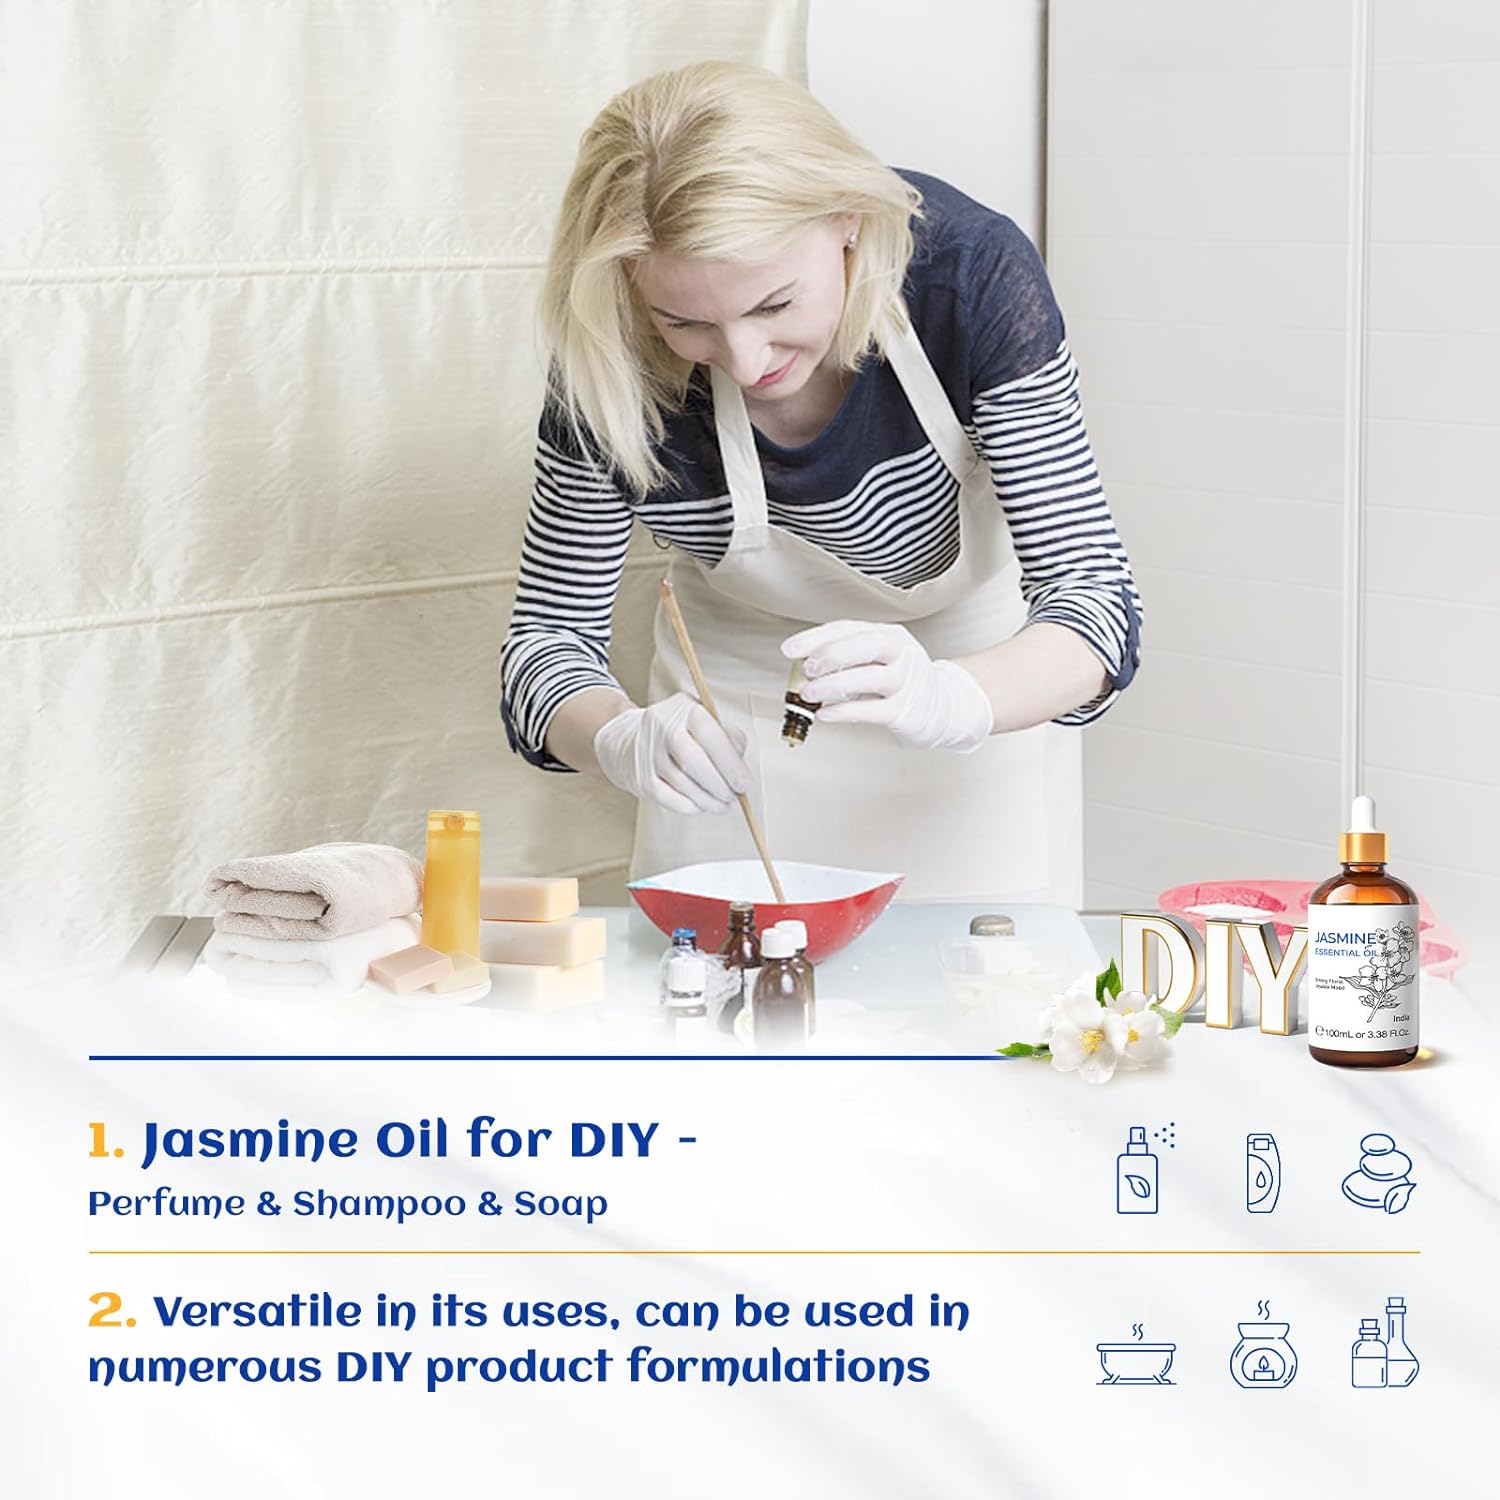 HIQILI Jasmine Essential Oil, Premium Quality Pure & Natural Jasmine Oil for Diffuser, Perfume, Shampoo, Aromatherapy - 3.38 Fl Oz : Health & Household